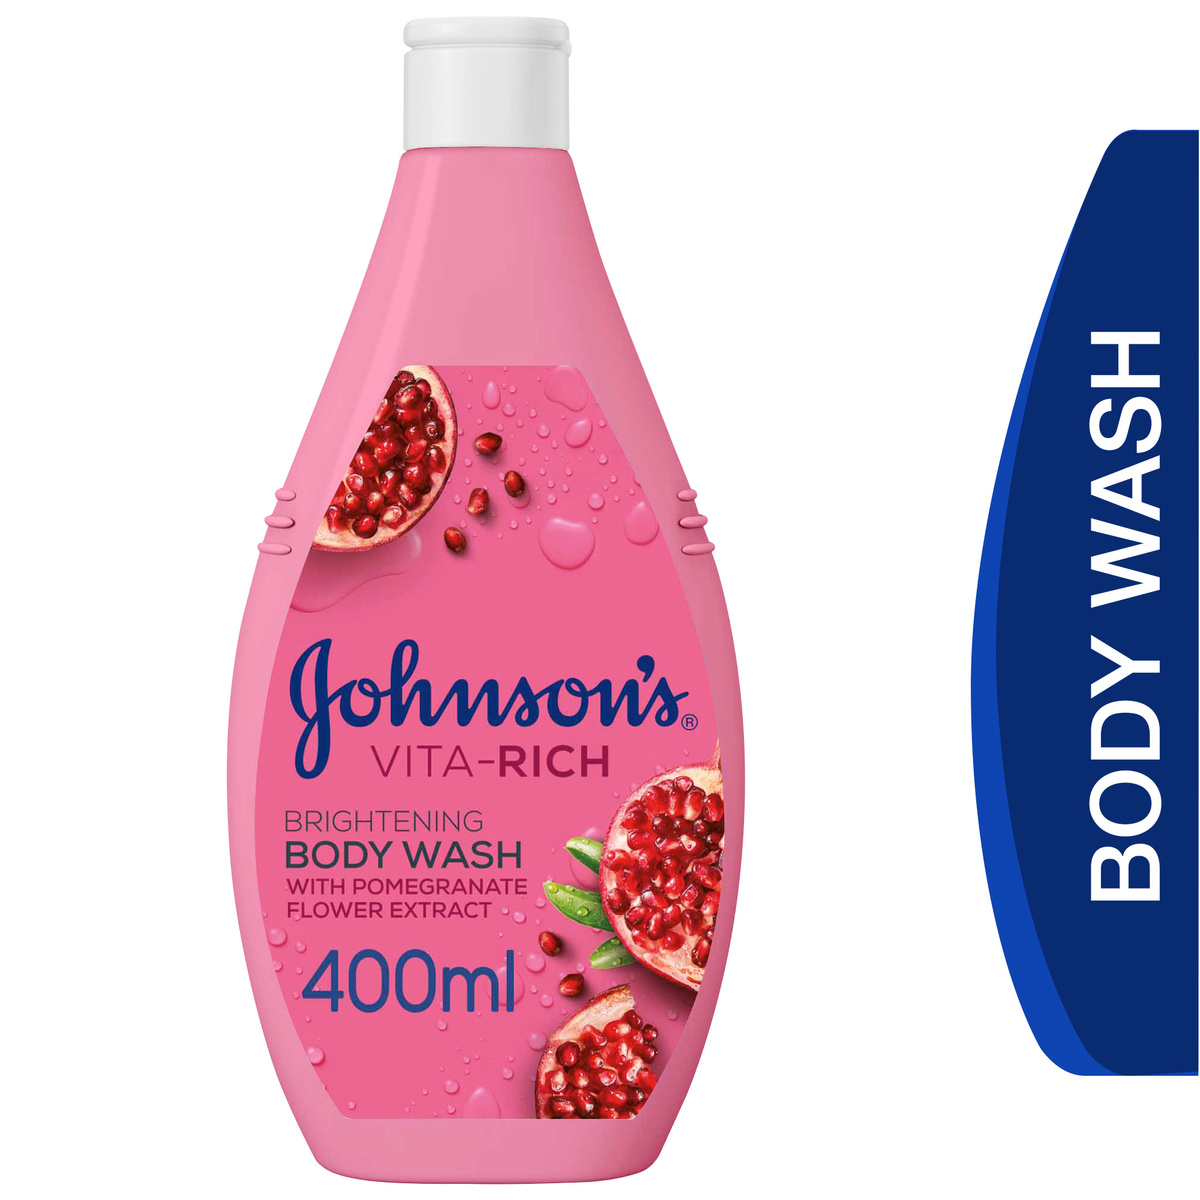 Johnson's Body Wash Vita-Rich Brightening 400ml